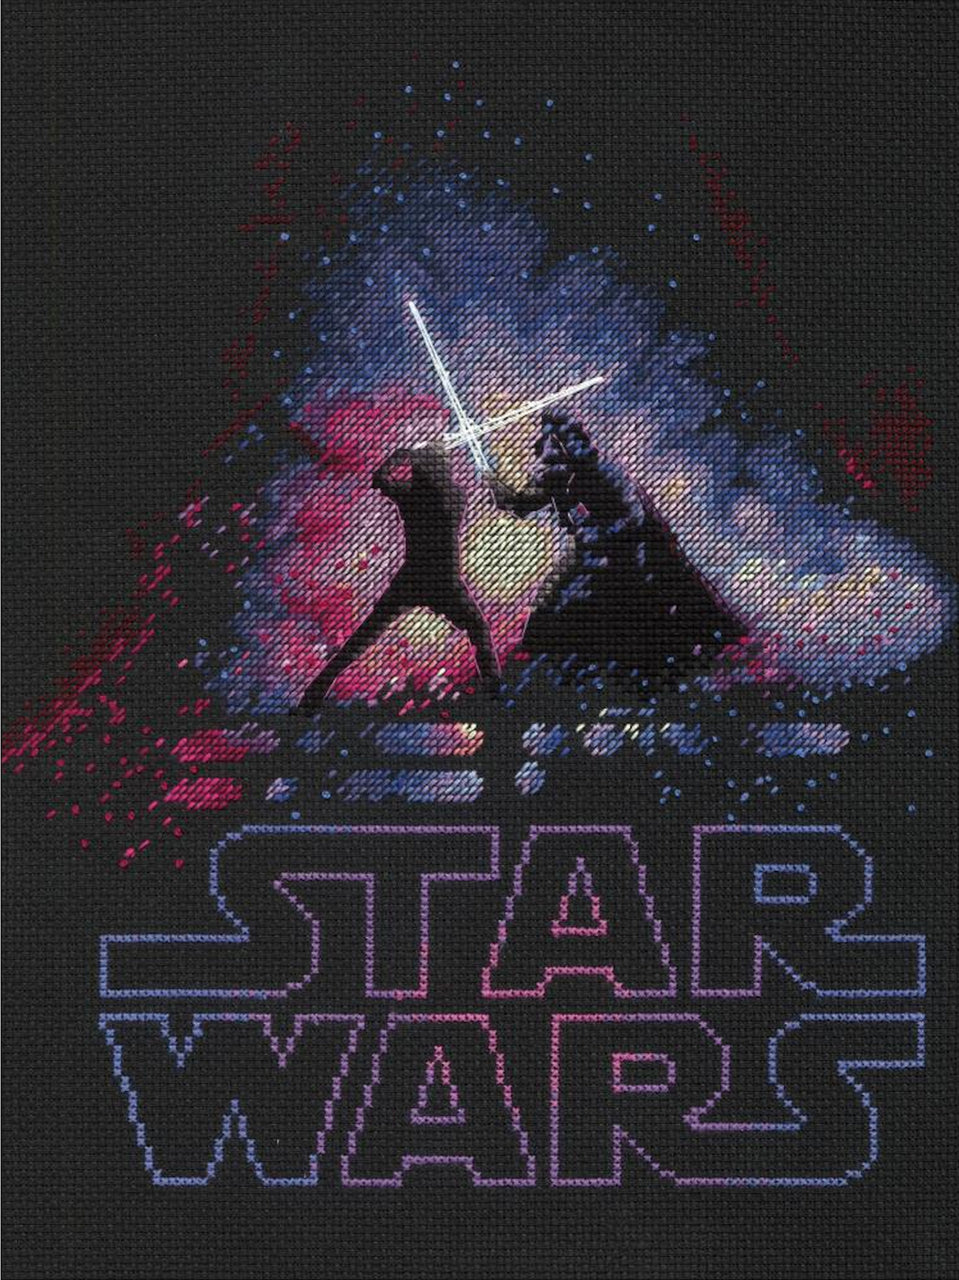 Dimensions Counted Cross Stitch Kit -Star Wars Luke & Darth Vader